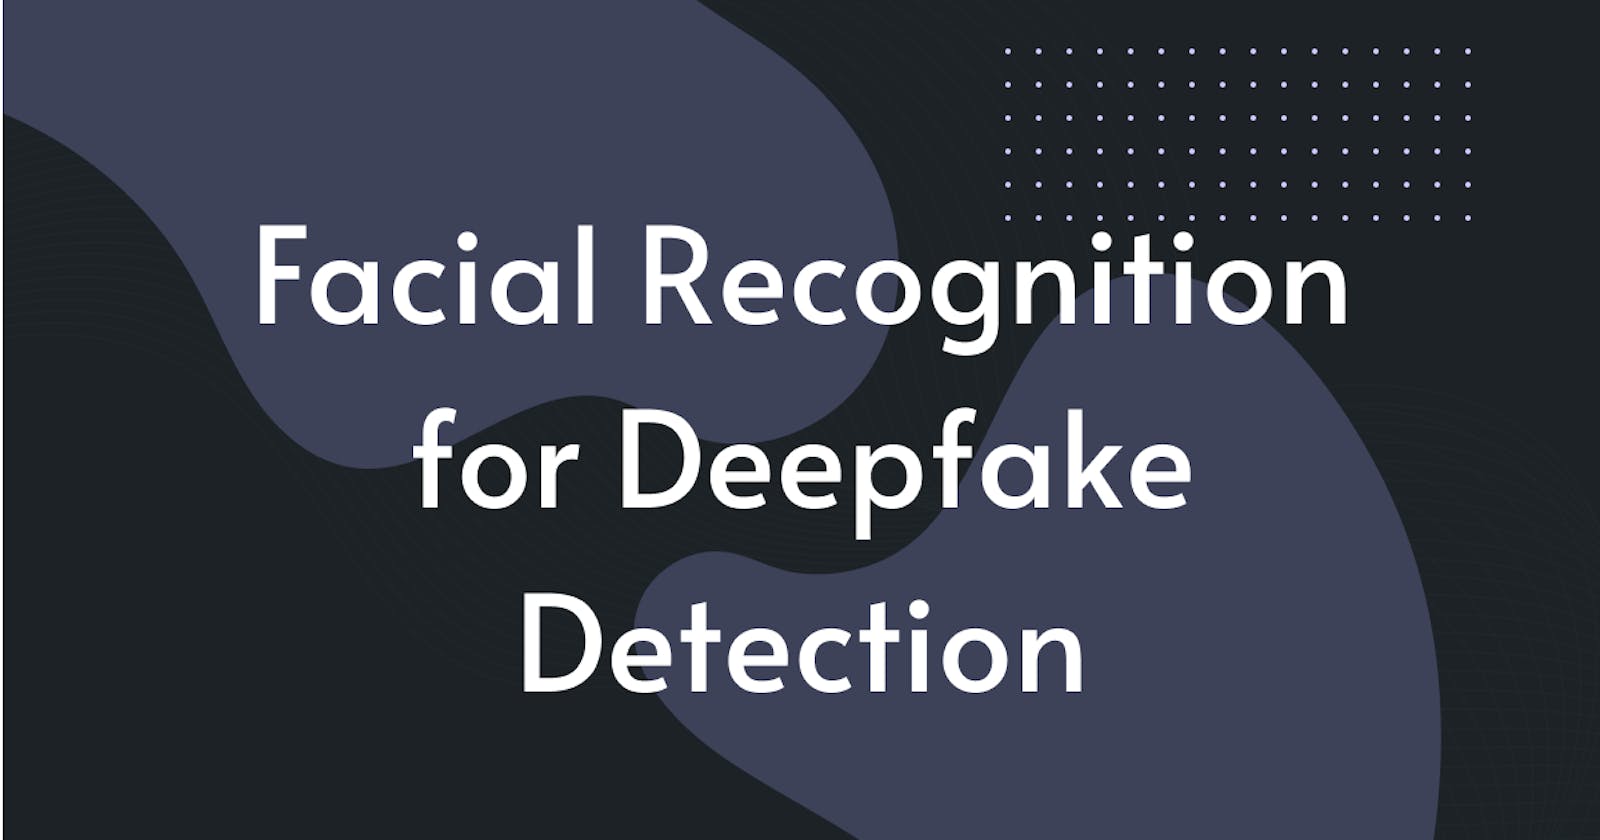 Facial Recognition for Deepfake Detection